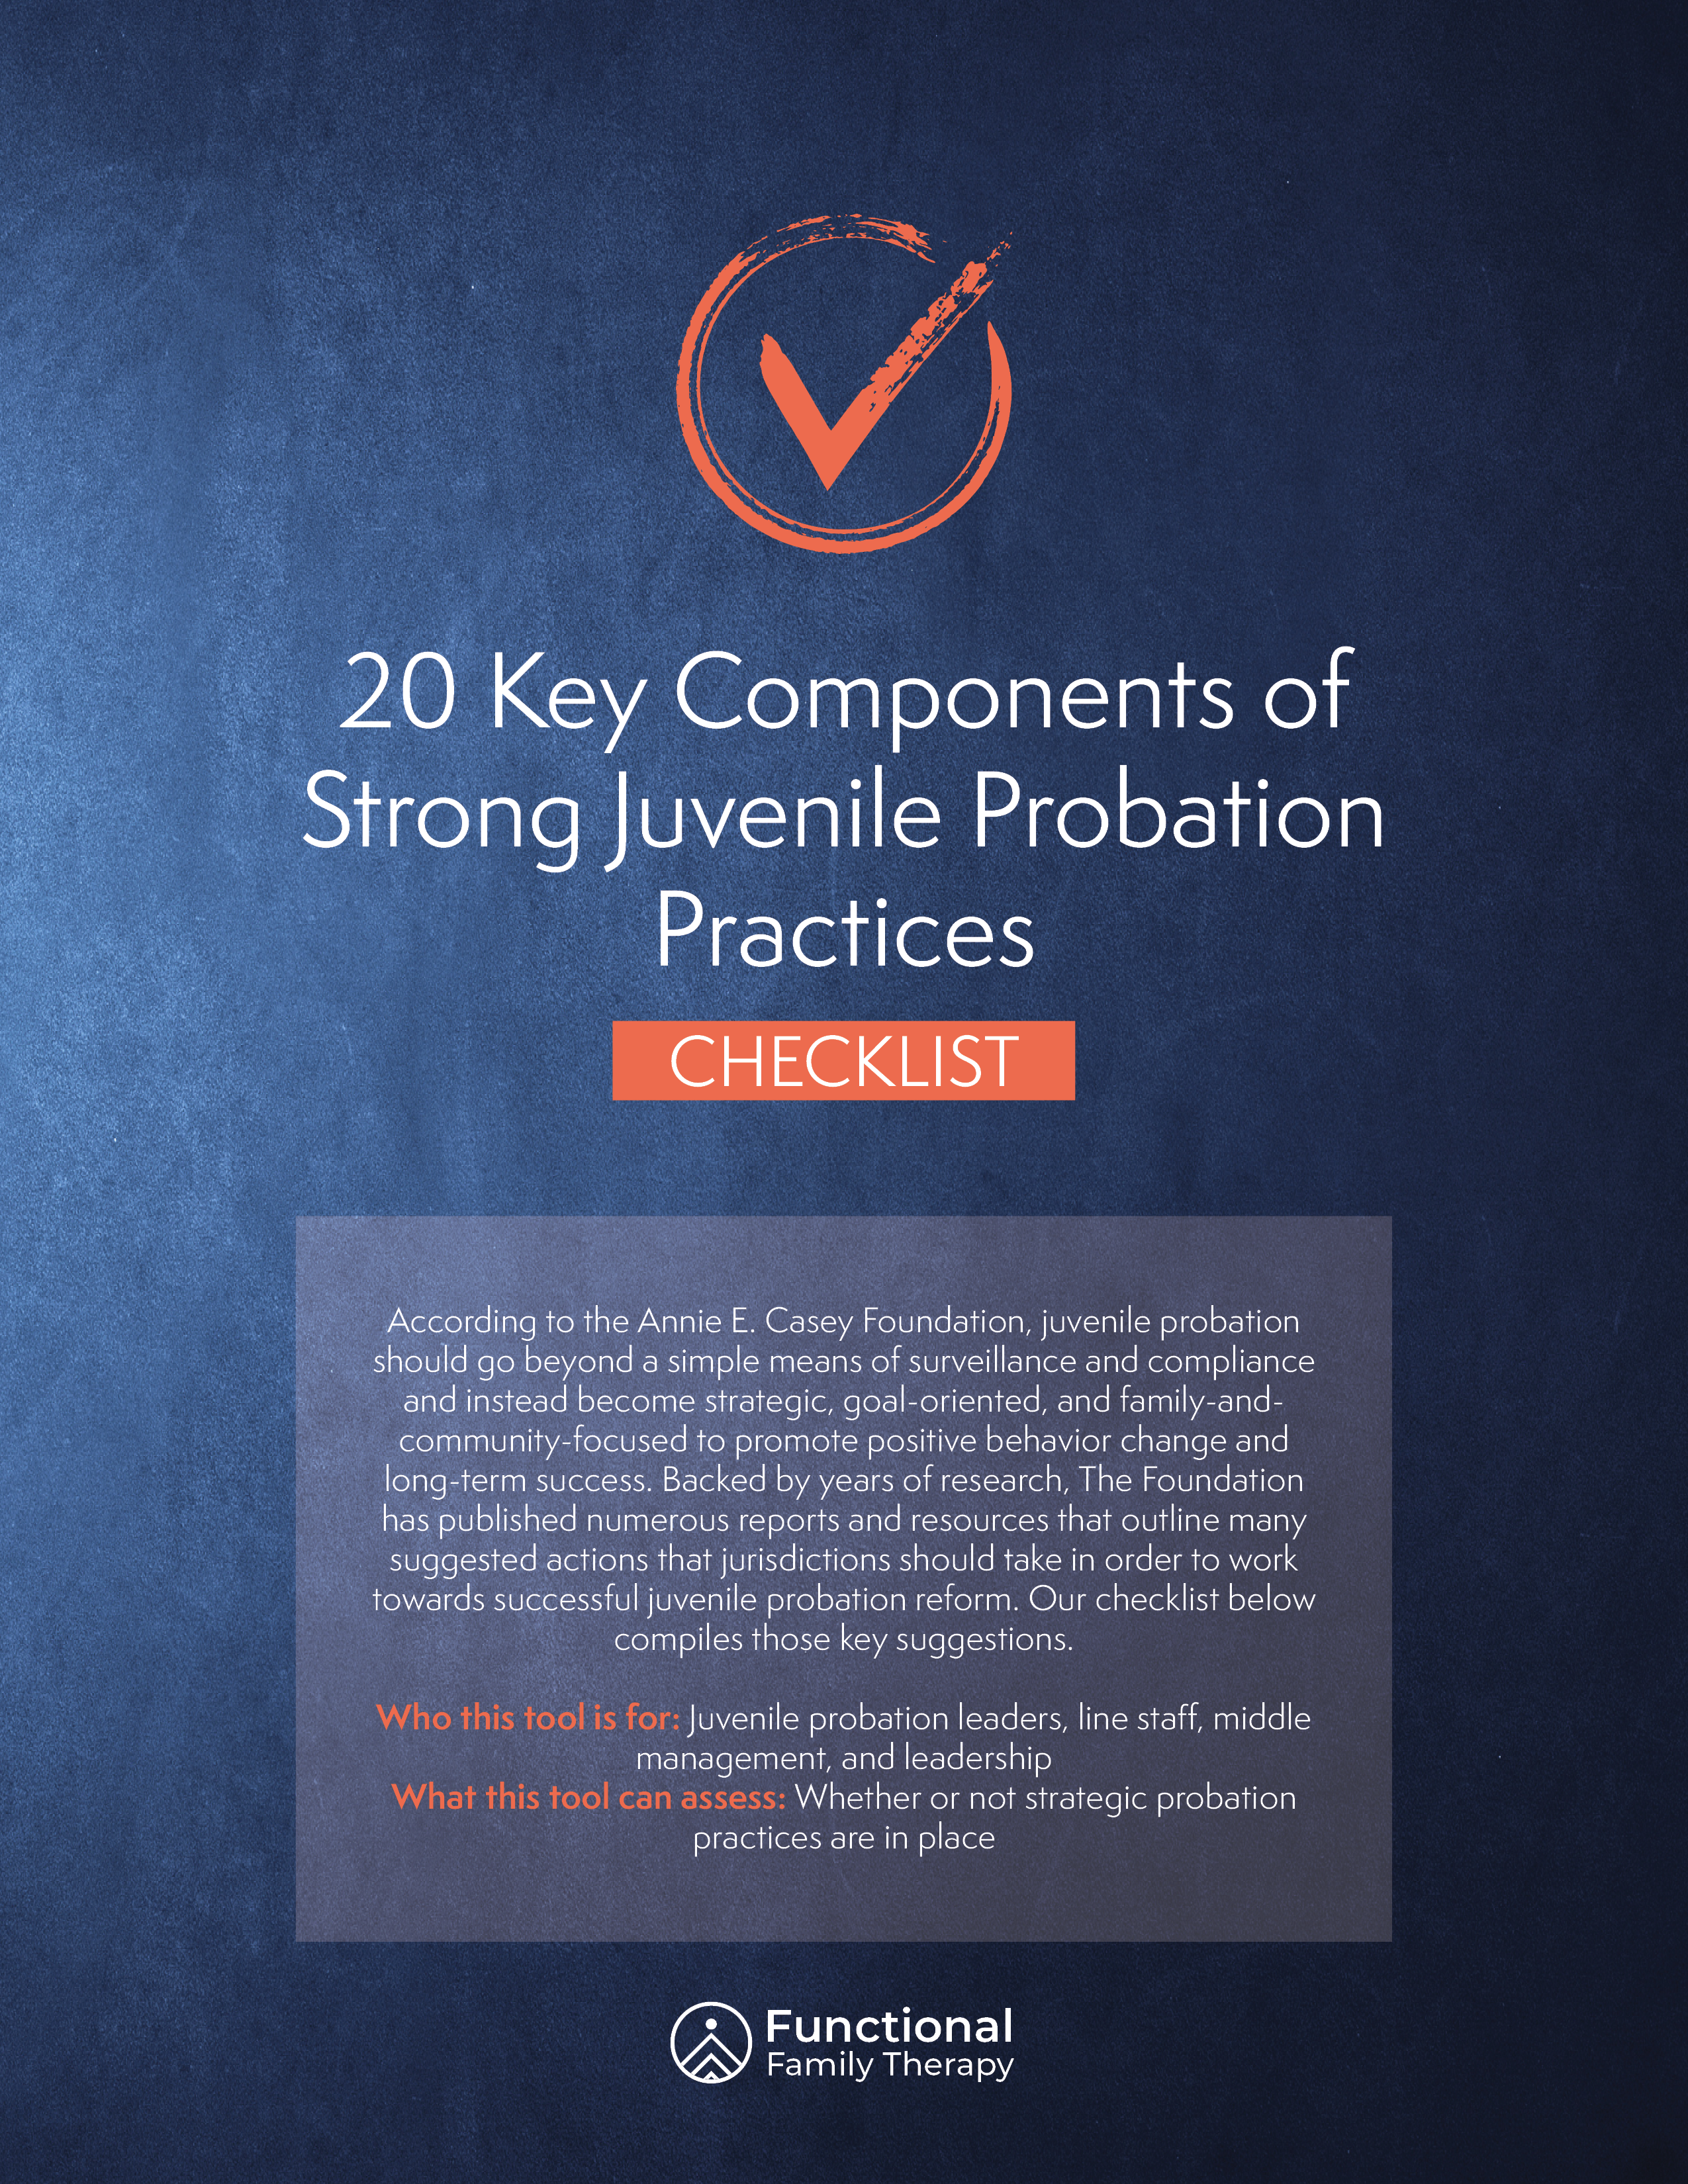 Juvenile probation reform